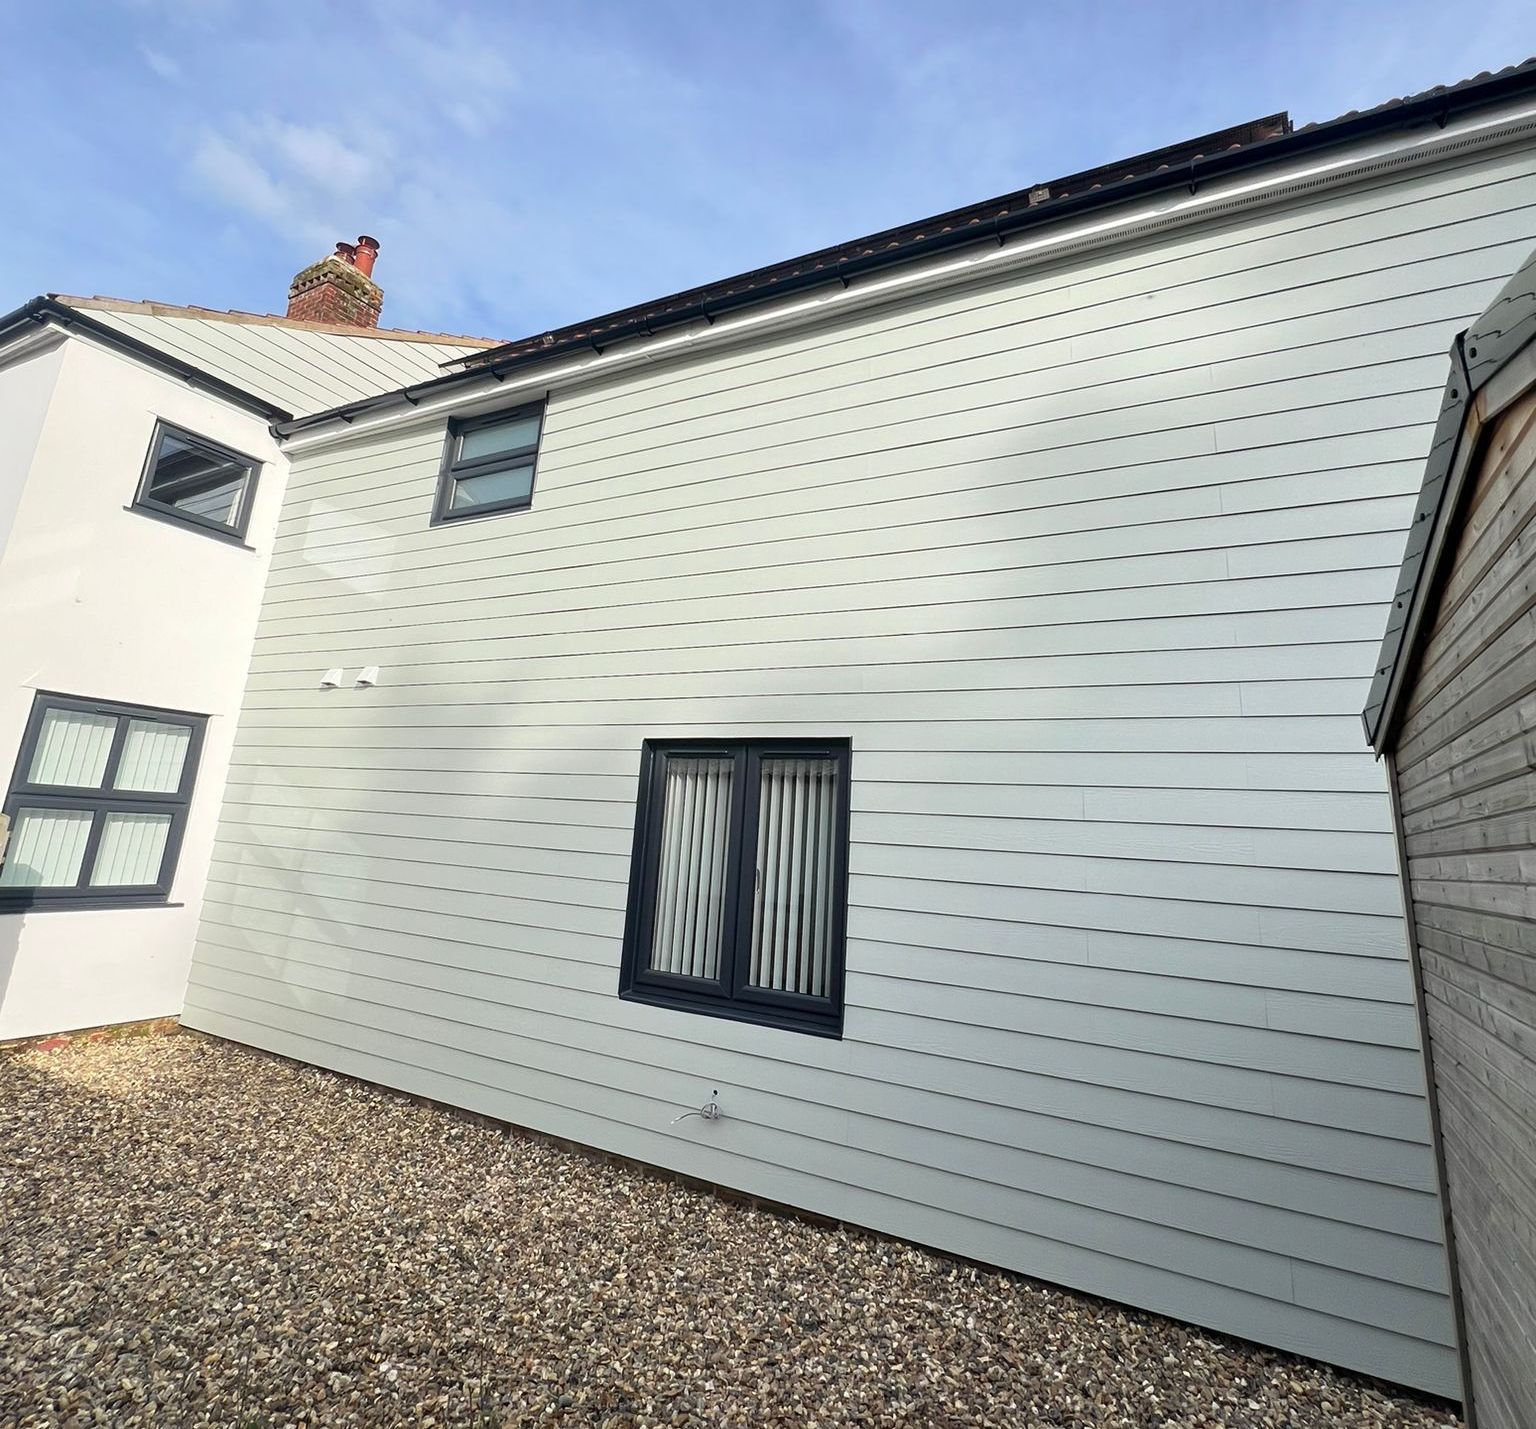 Local Norwich, Norfolk Fibre Cement Board Cladding Installer KK Roofline Installations